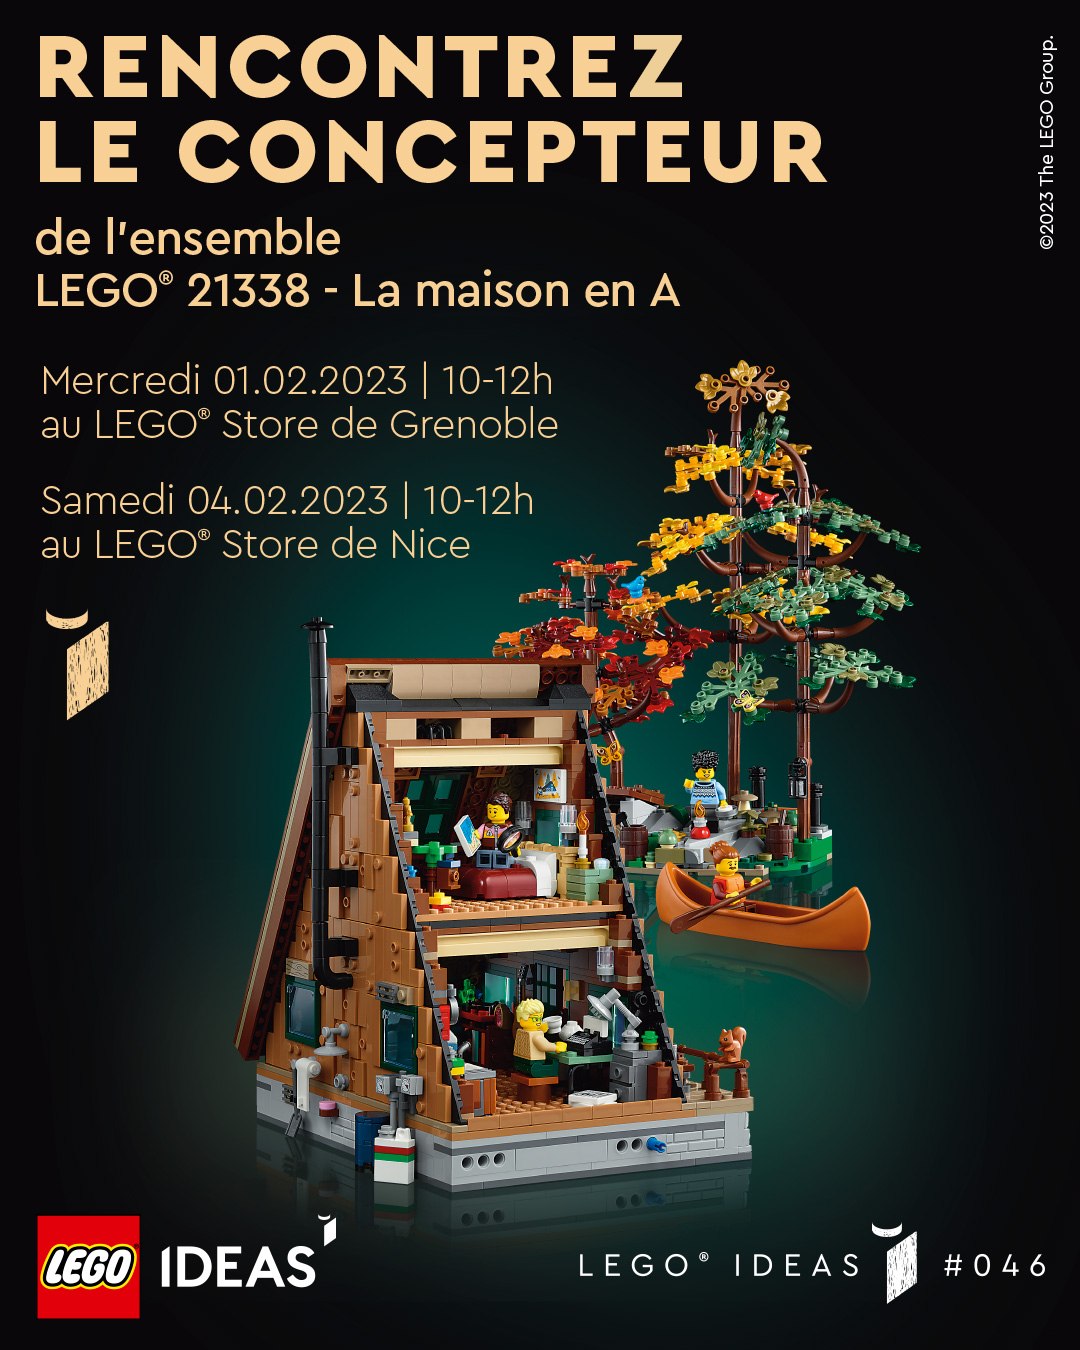 LEGO Ideas 21338 A-Frame Cabin: با طراح طرفدار در فروشگاه های گرنوبل و نیس آشنا شوید